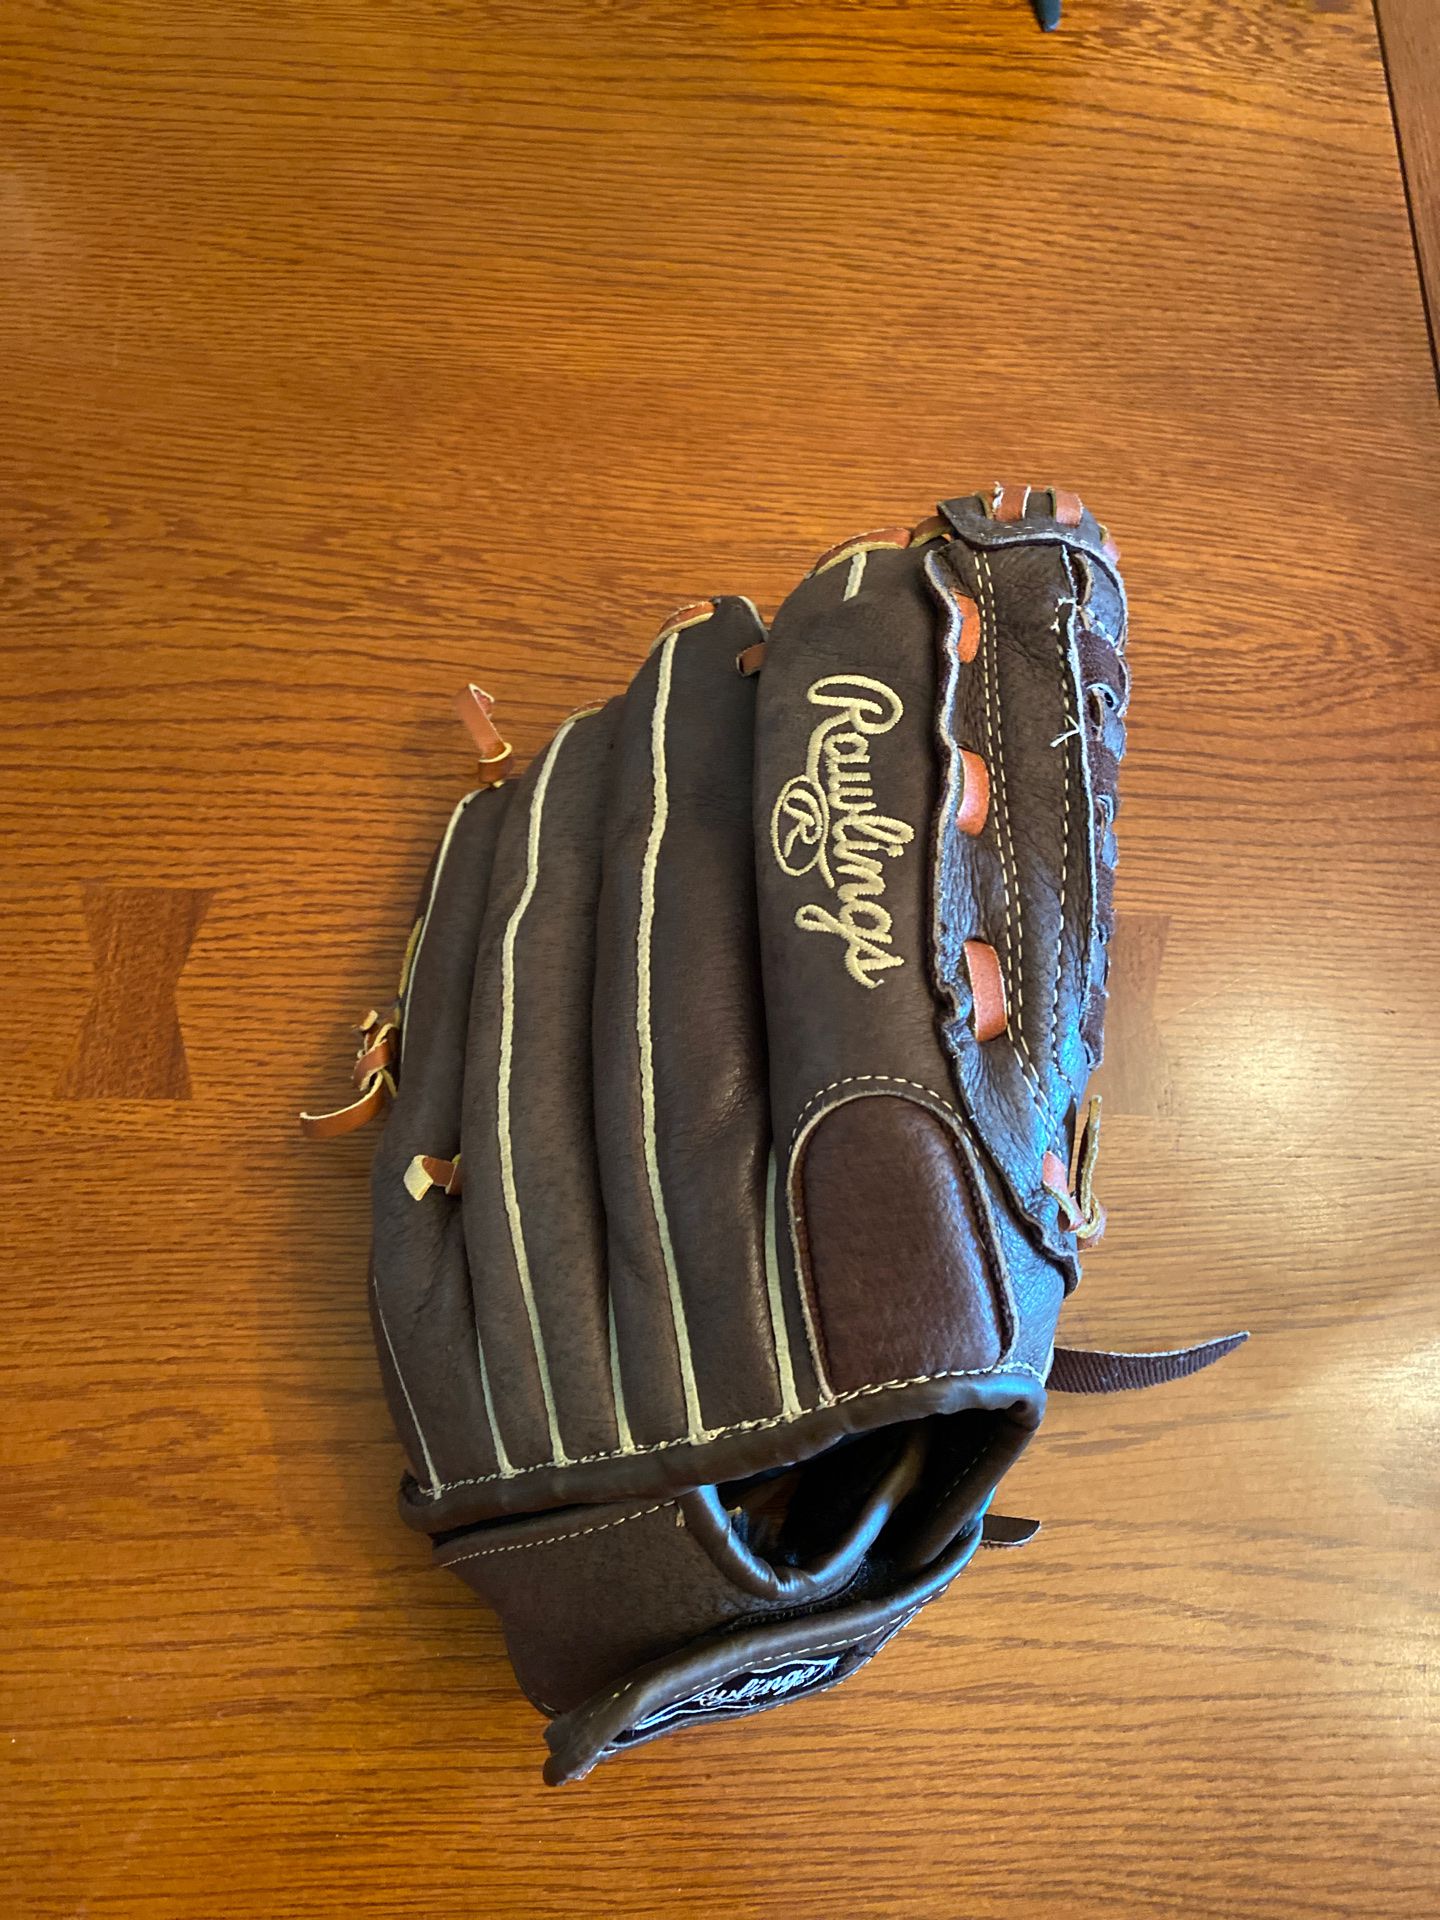 Rawlings girl’s softball glove